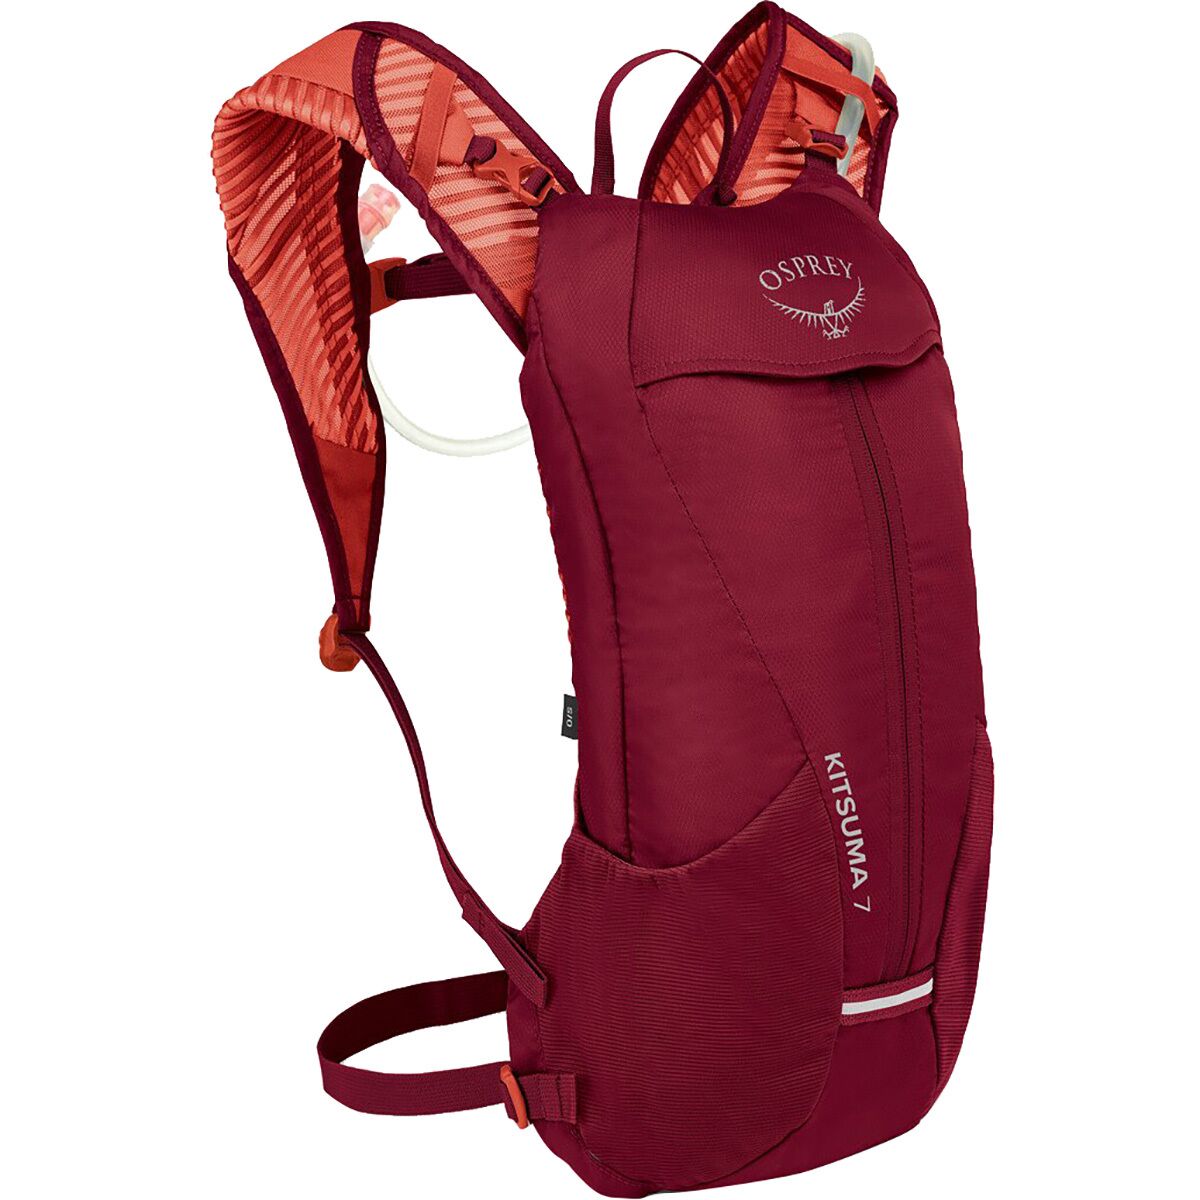 Osprey Packs Kitsuma 7L Backpack - Women's Claret Red, One Size